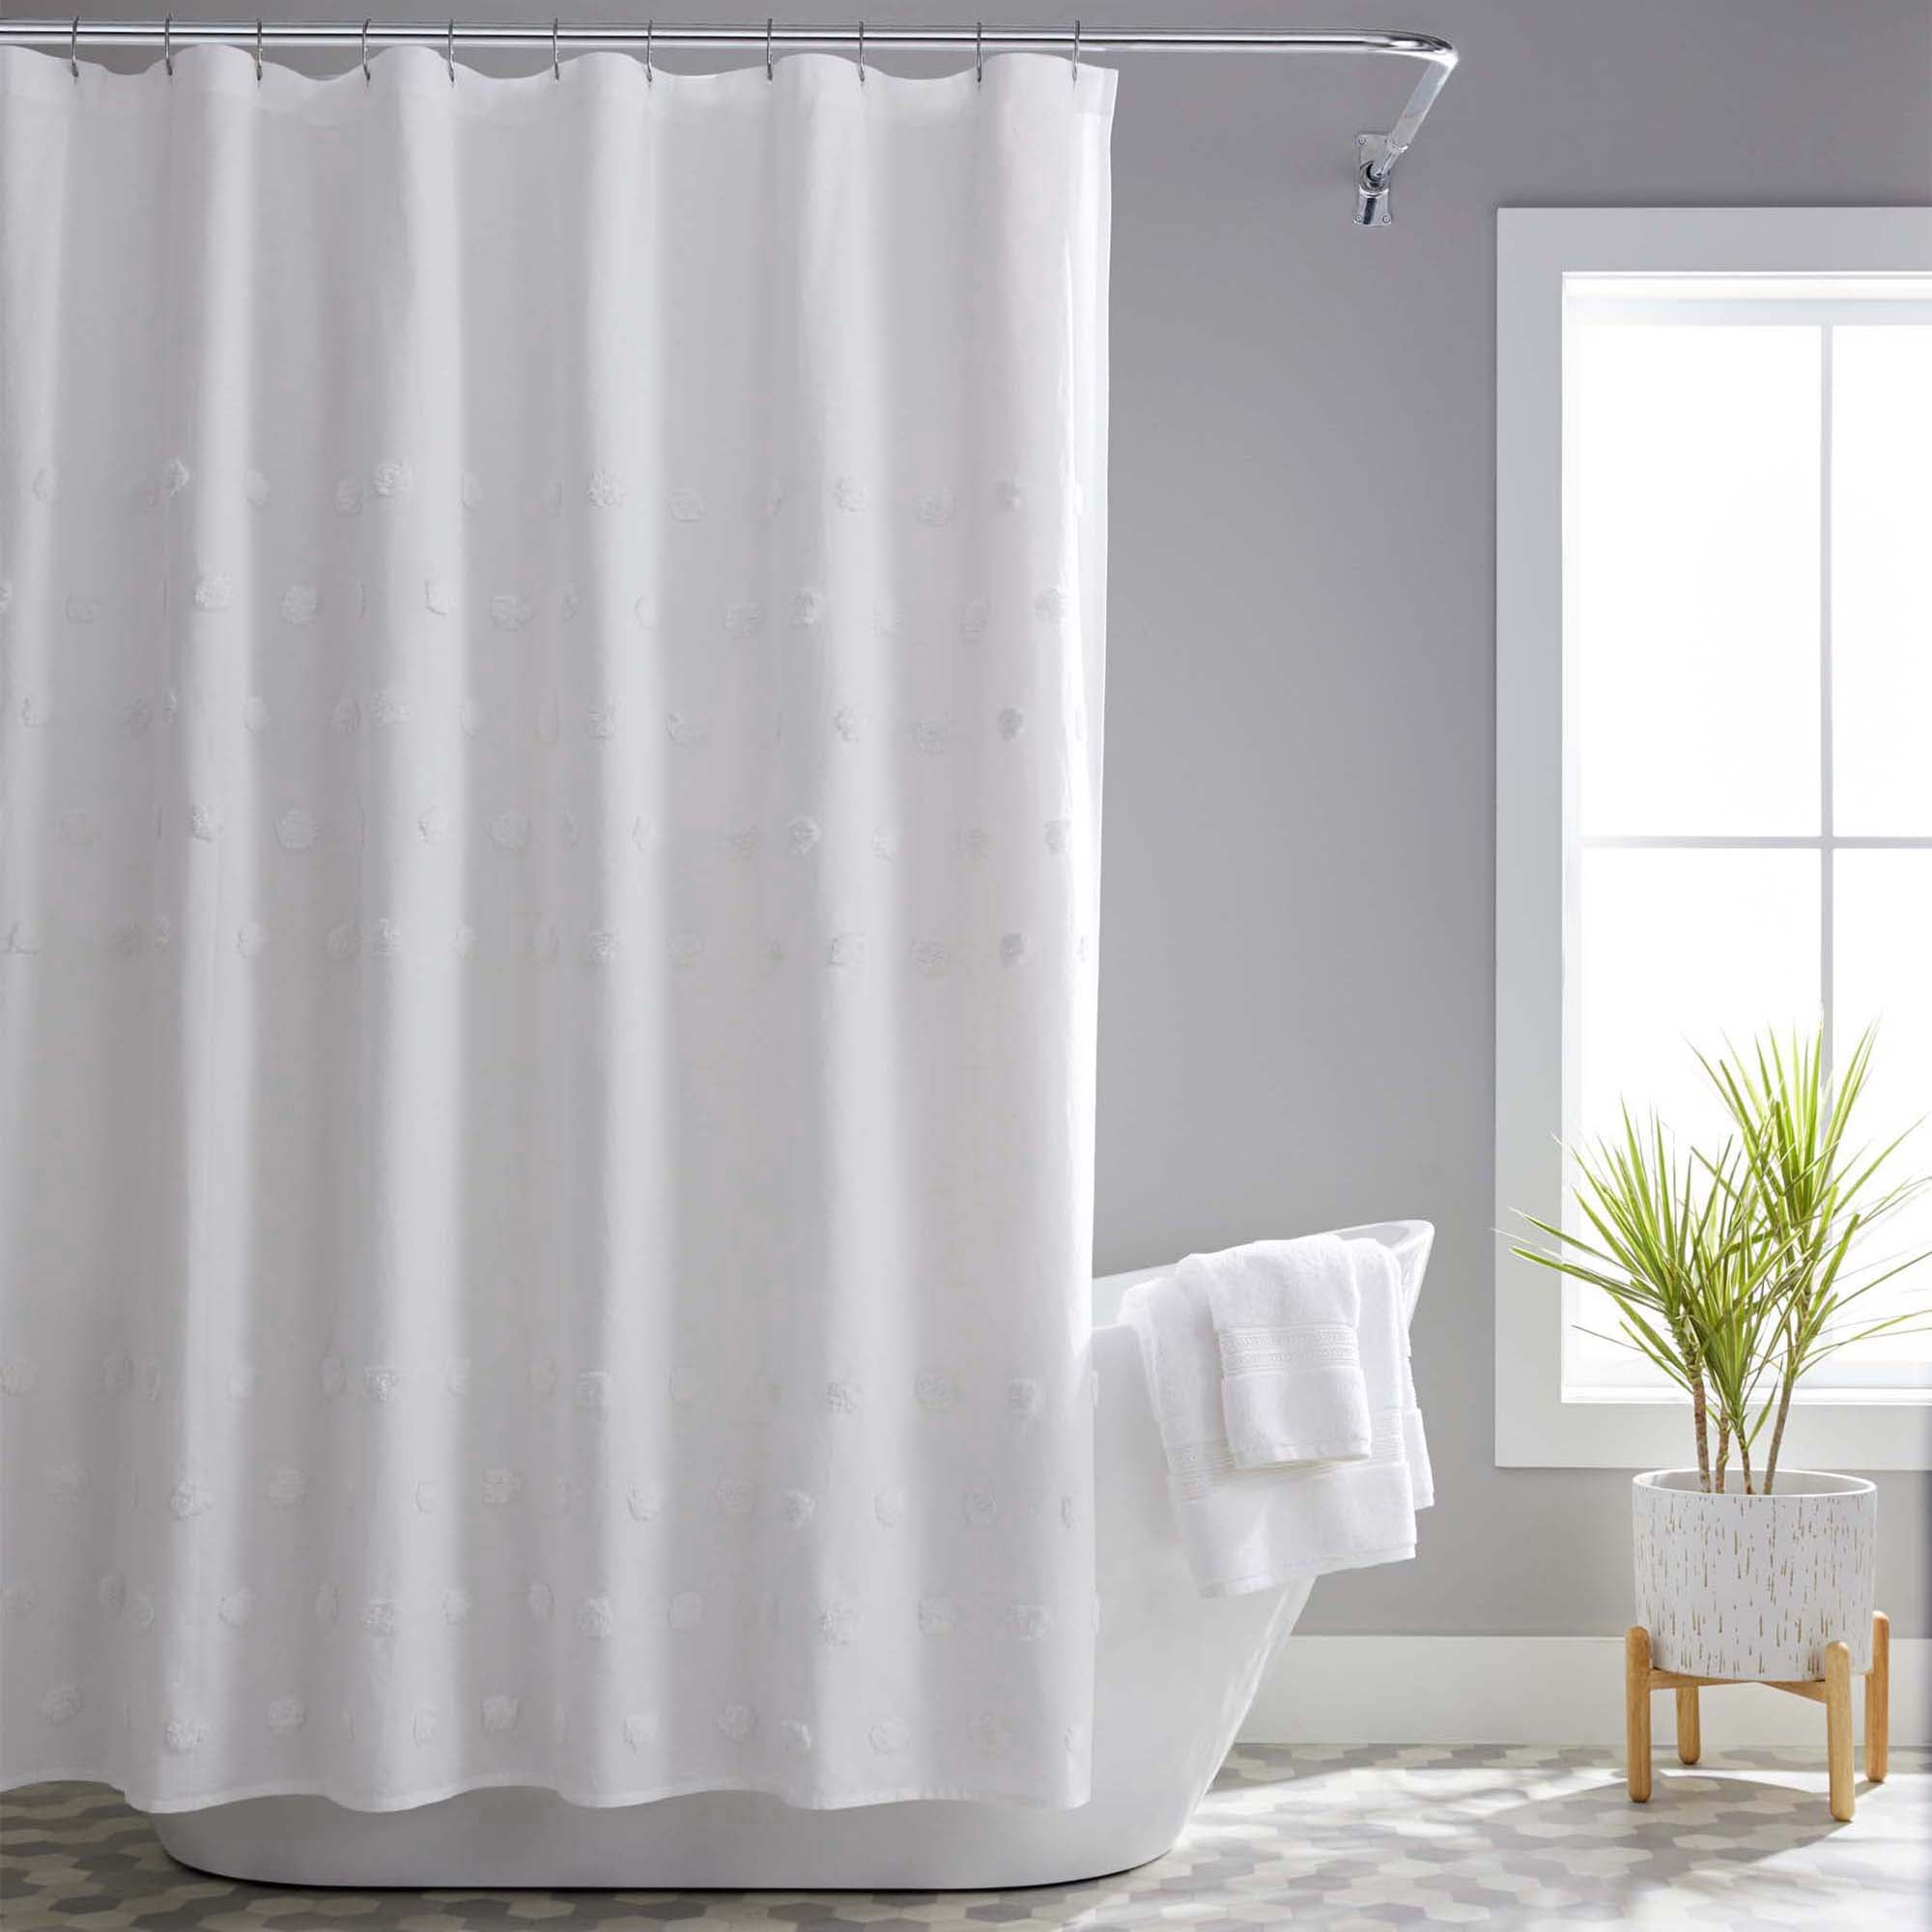 The Fire Horse Waterproof Fabric Home Decor Shower Curtain Bathroom Mat 